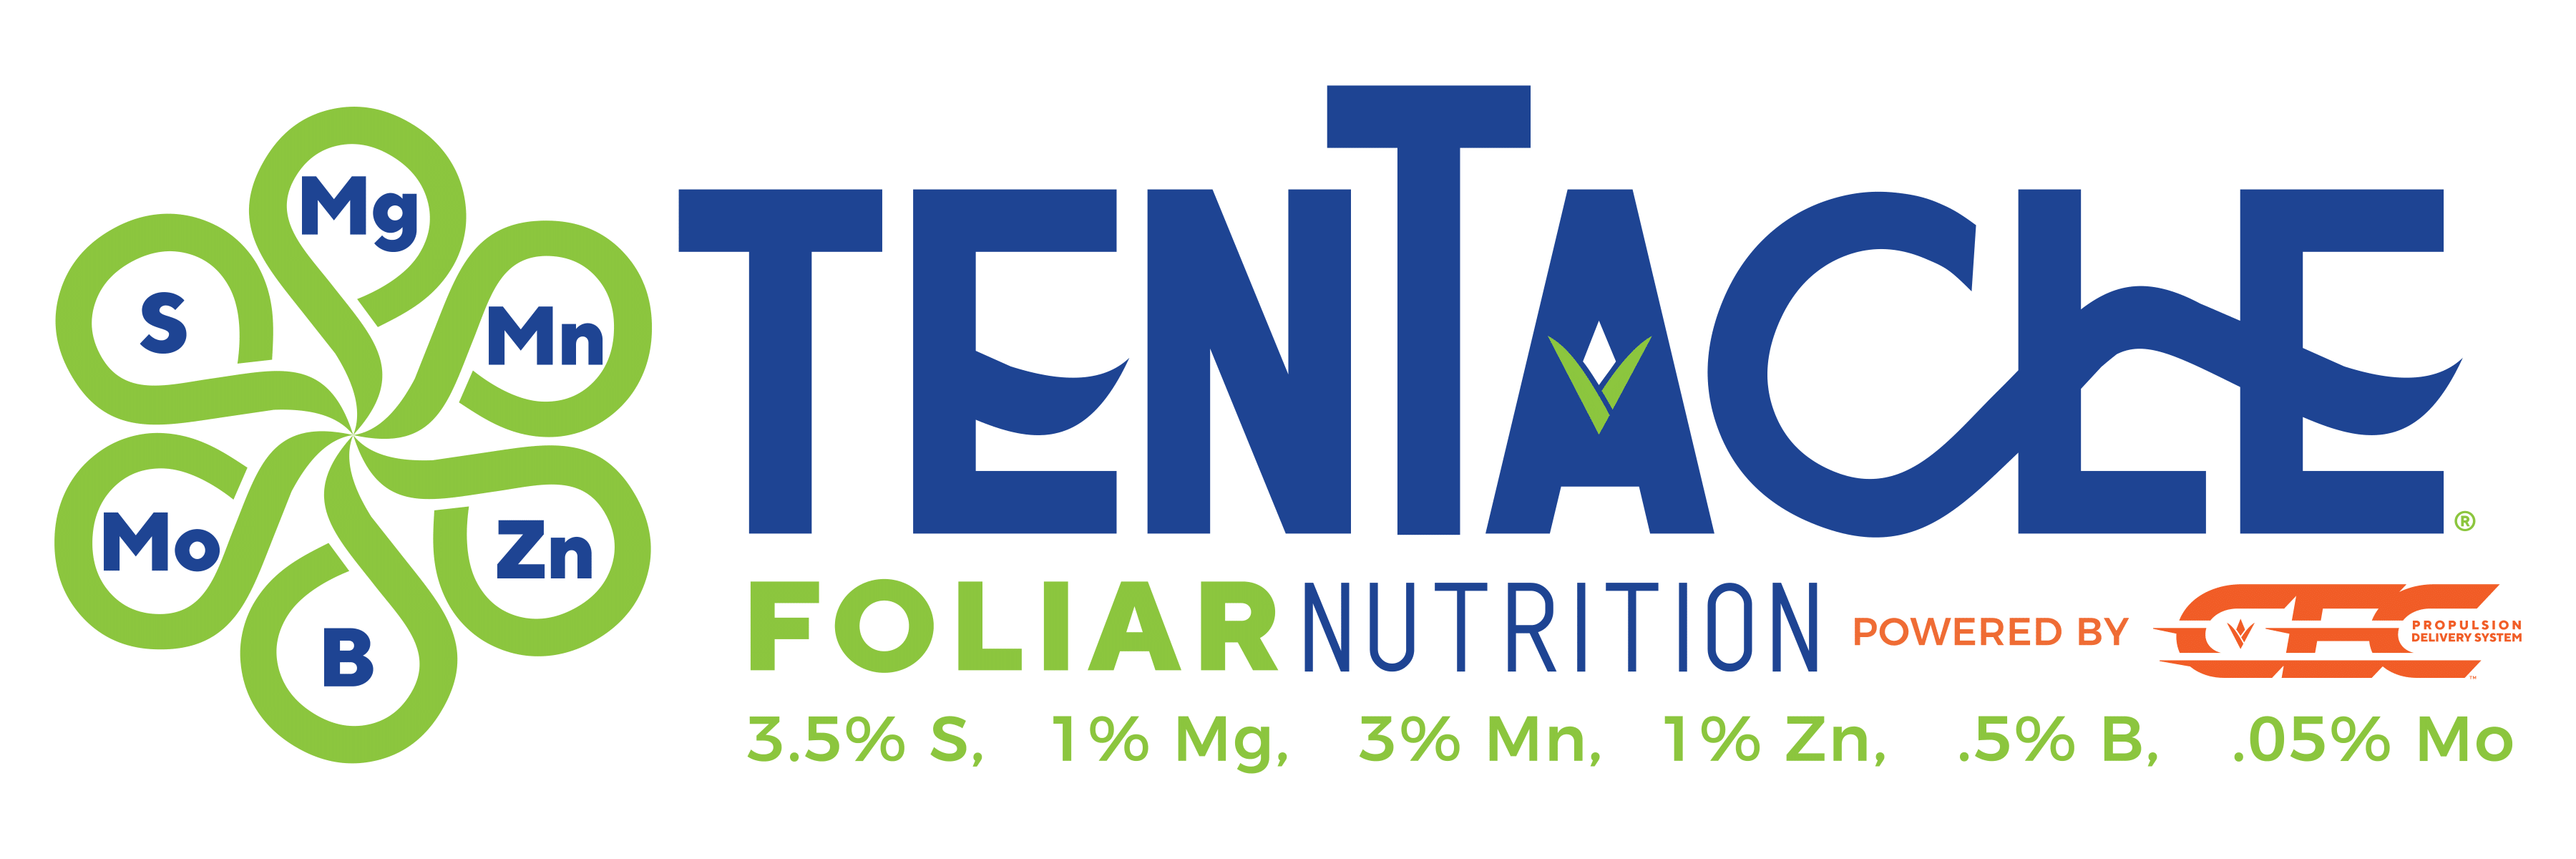 Tentacle CEC logo